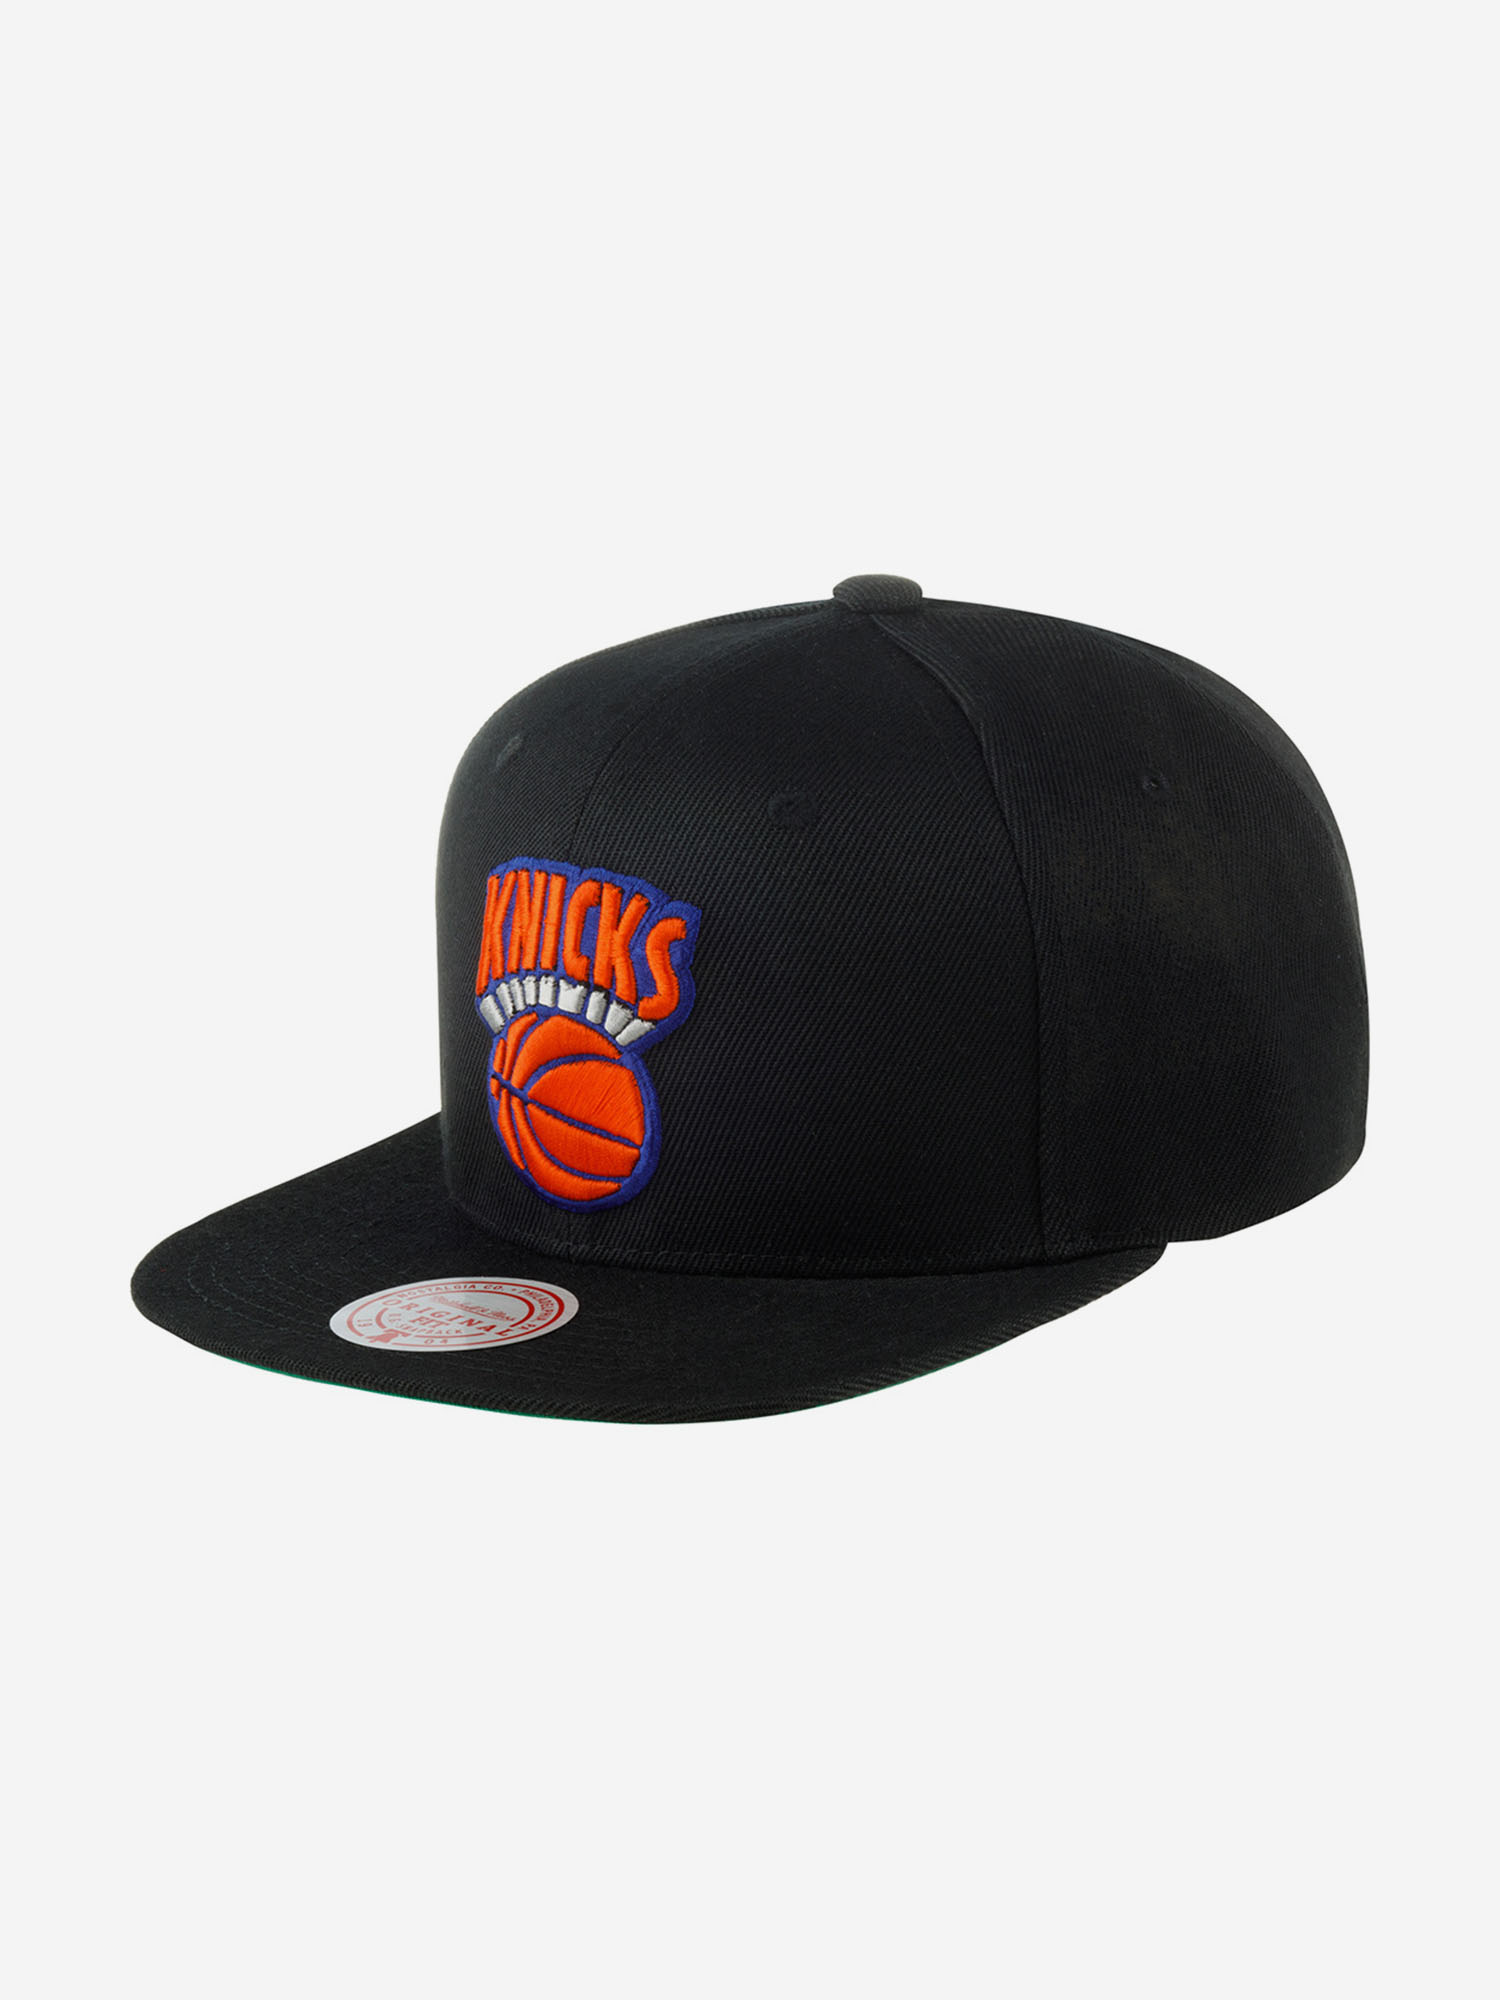 Бейсболка с прямым козырьком MITCHELL NESS HHSS5803-NYKYYPPPBLCK New York Knicks NBA (черный), Черный